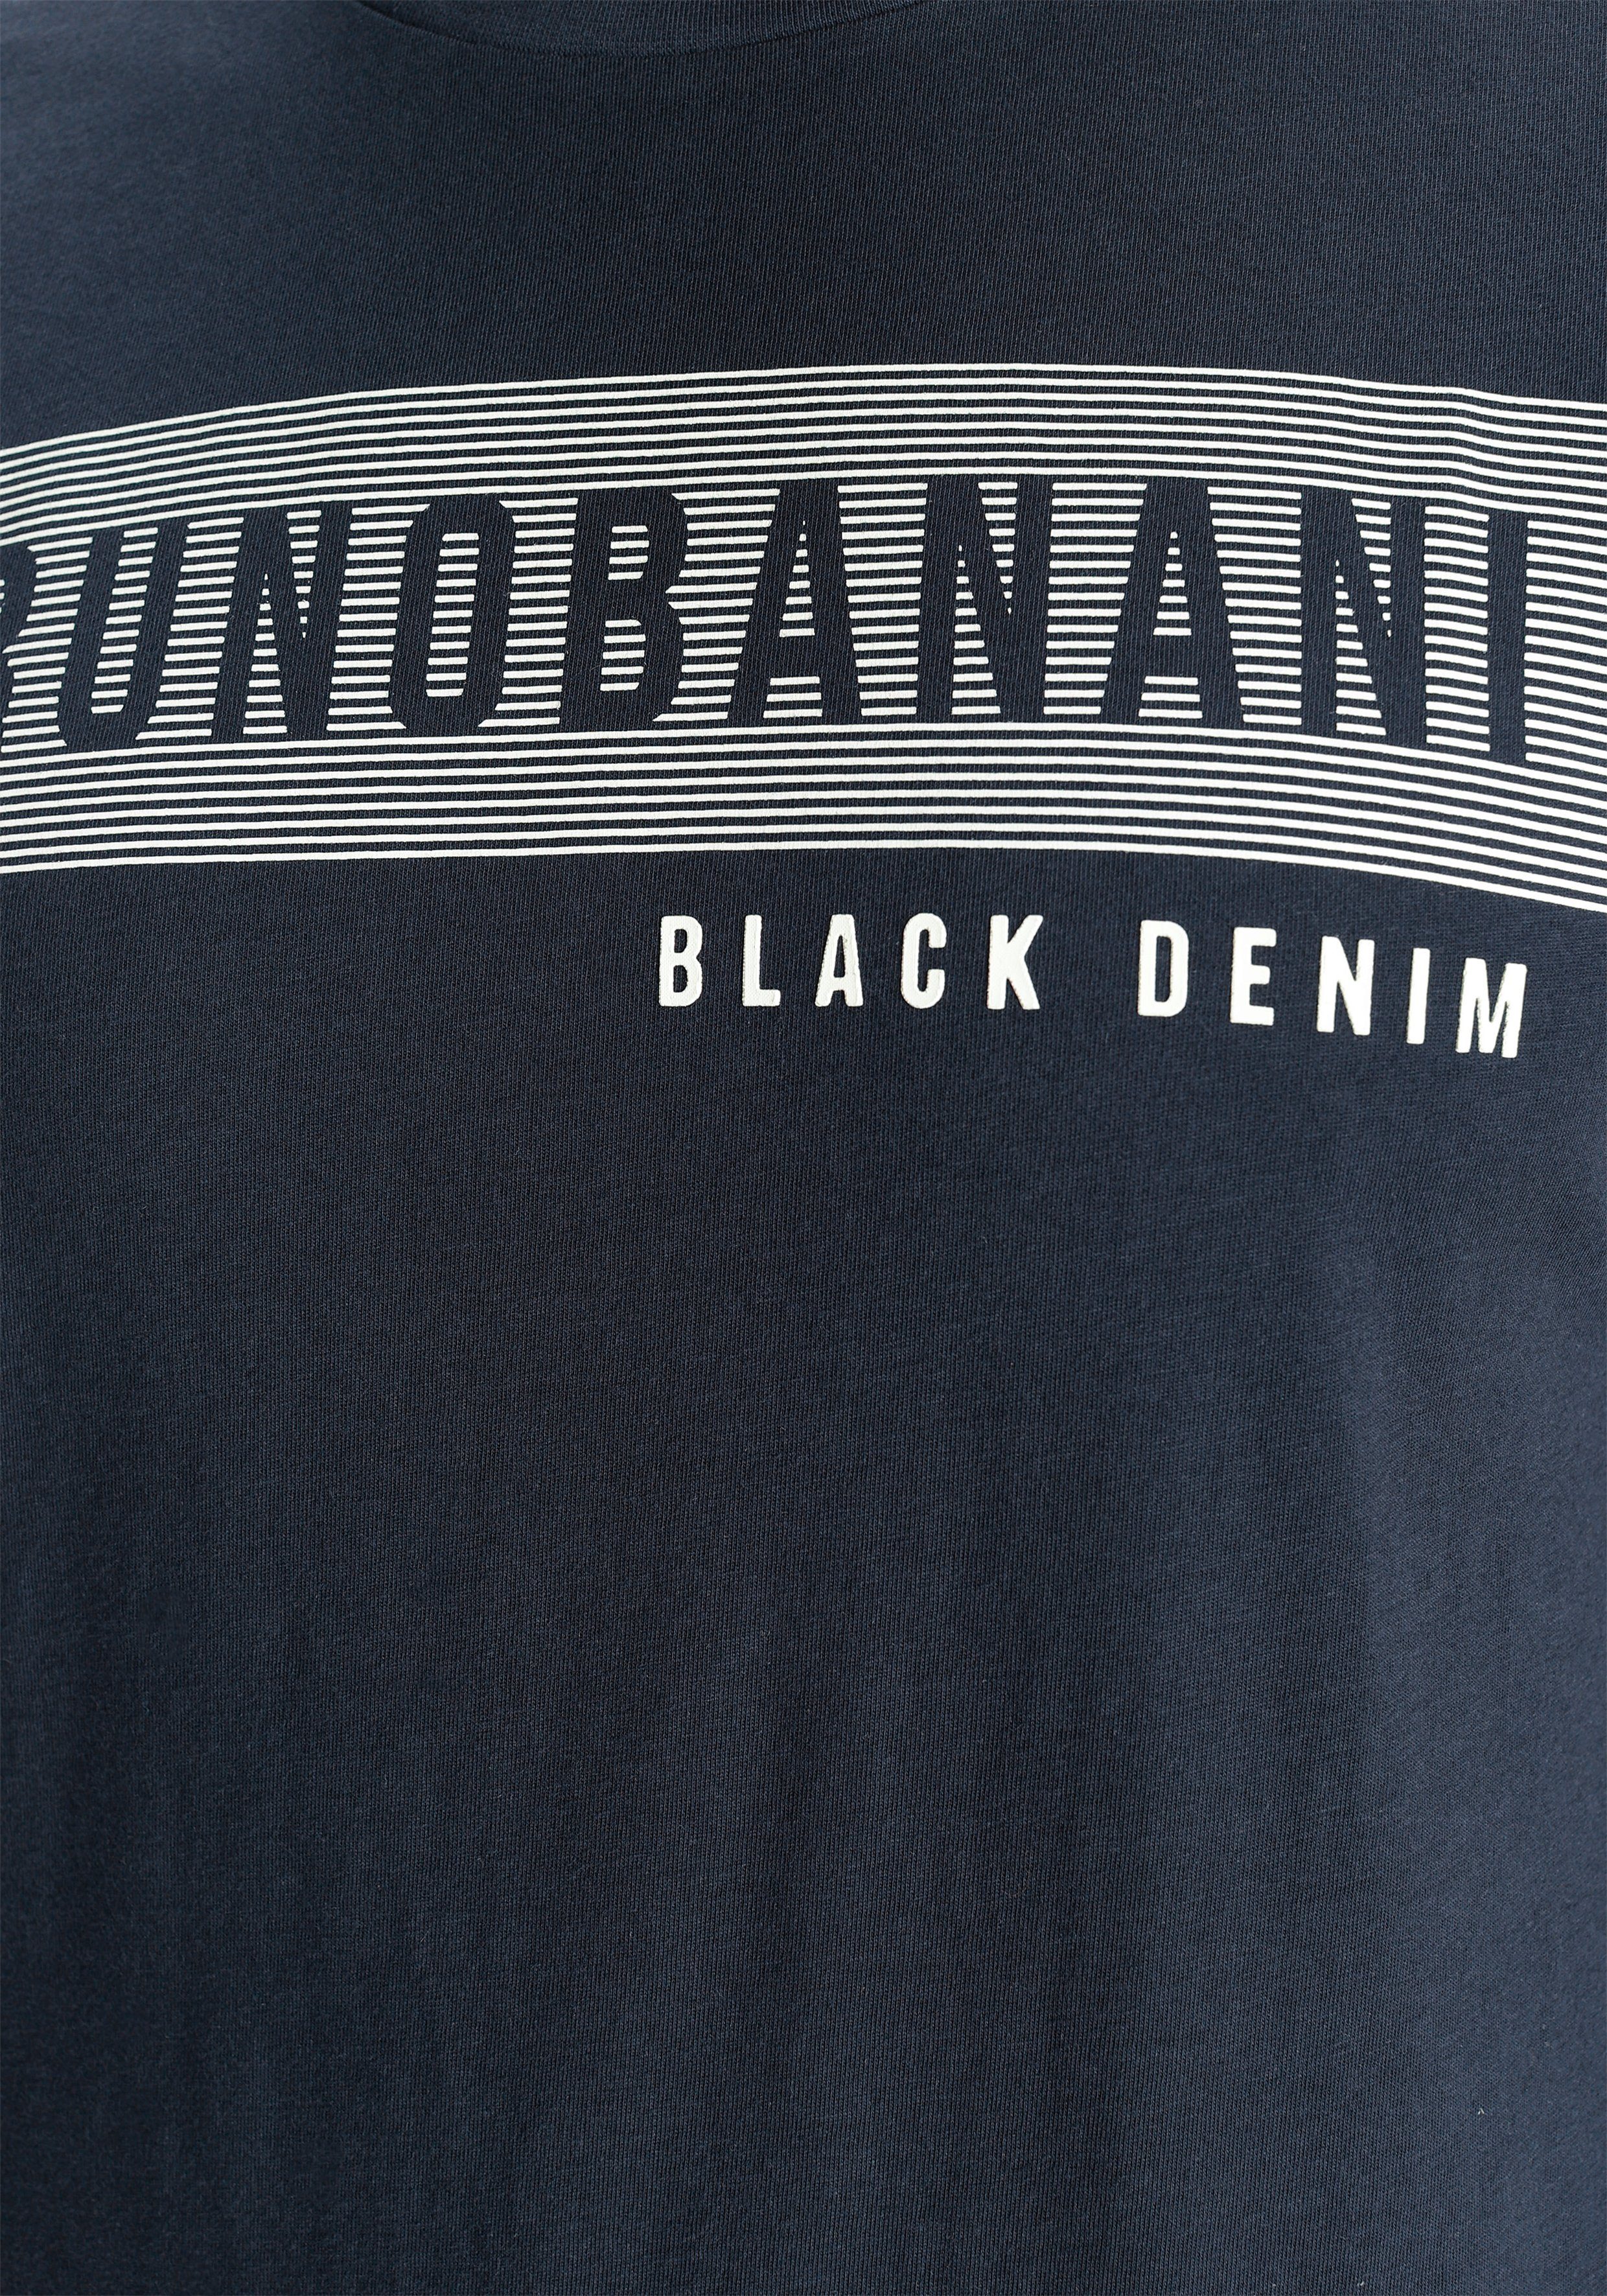 Banani marine Markenprint Bruno mit T-Shirt